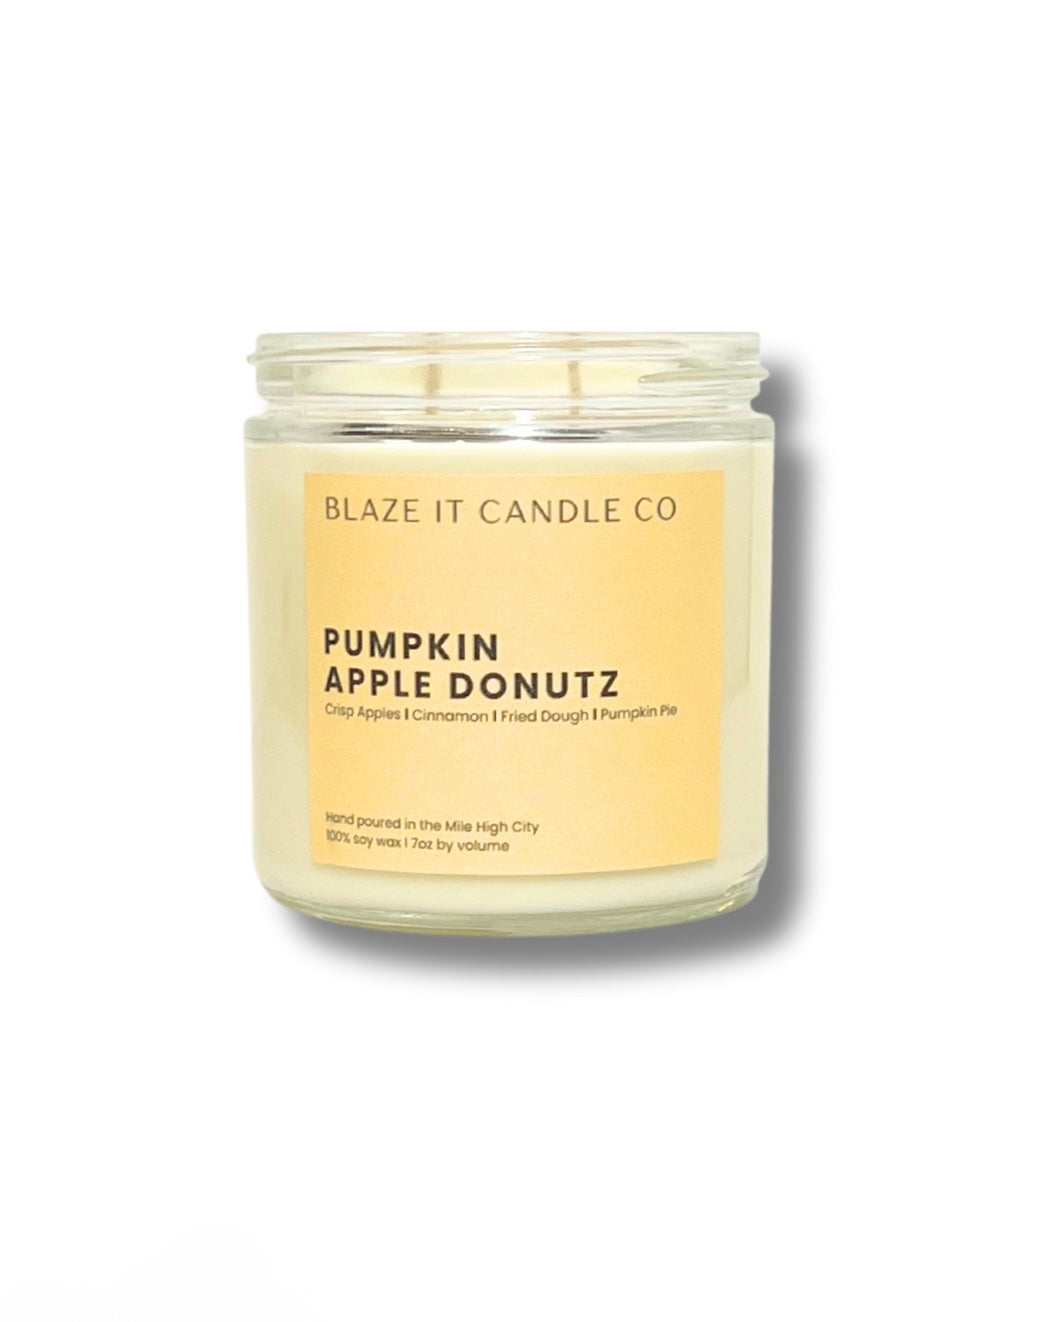 Pumpkin Apple Donutz candle - Blaze It Candle Co